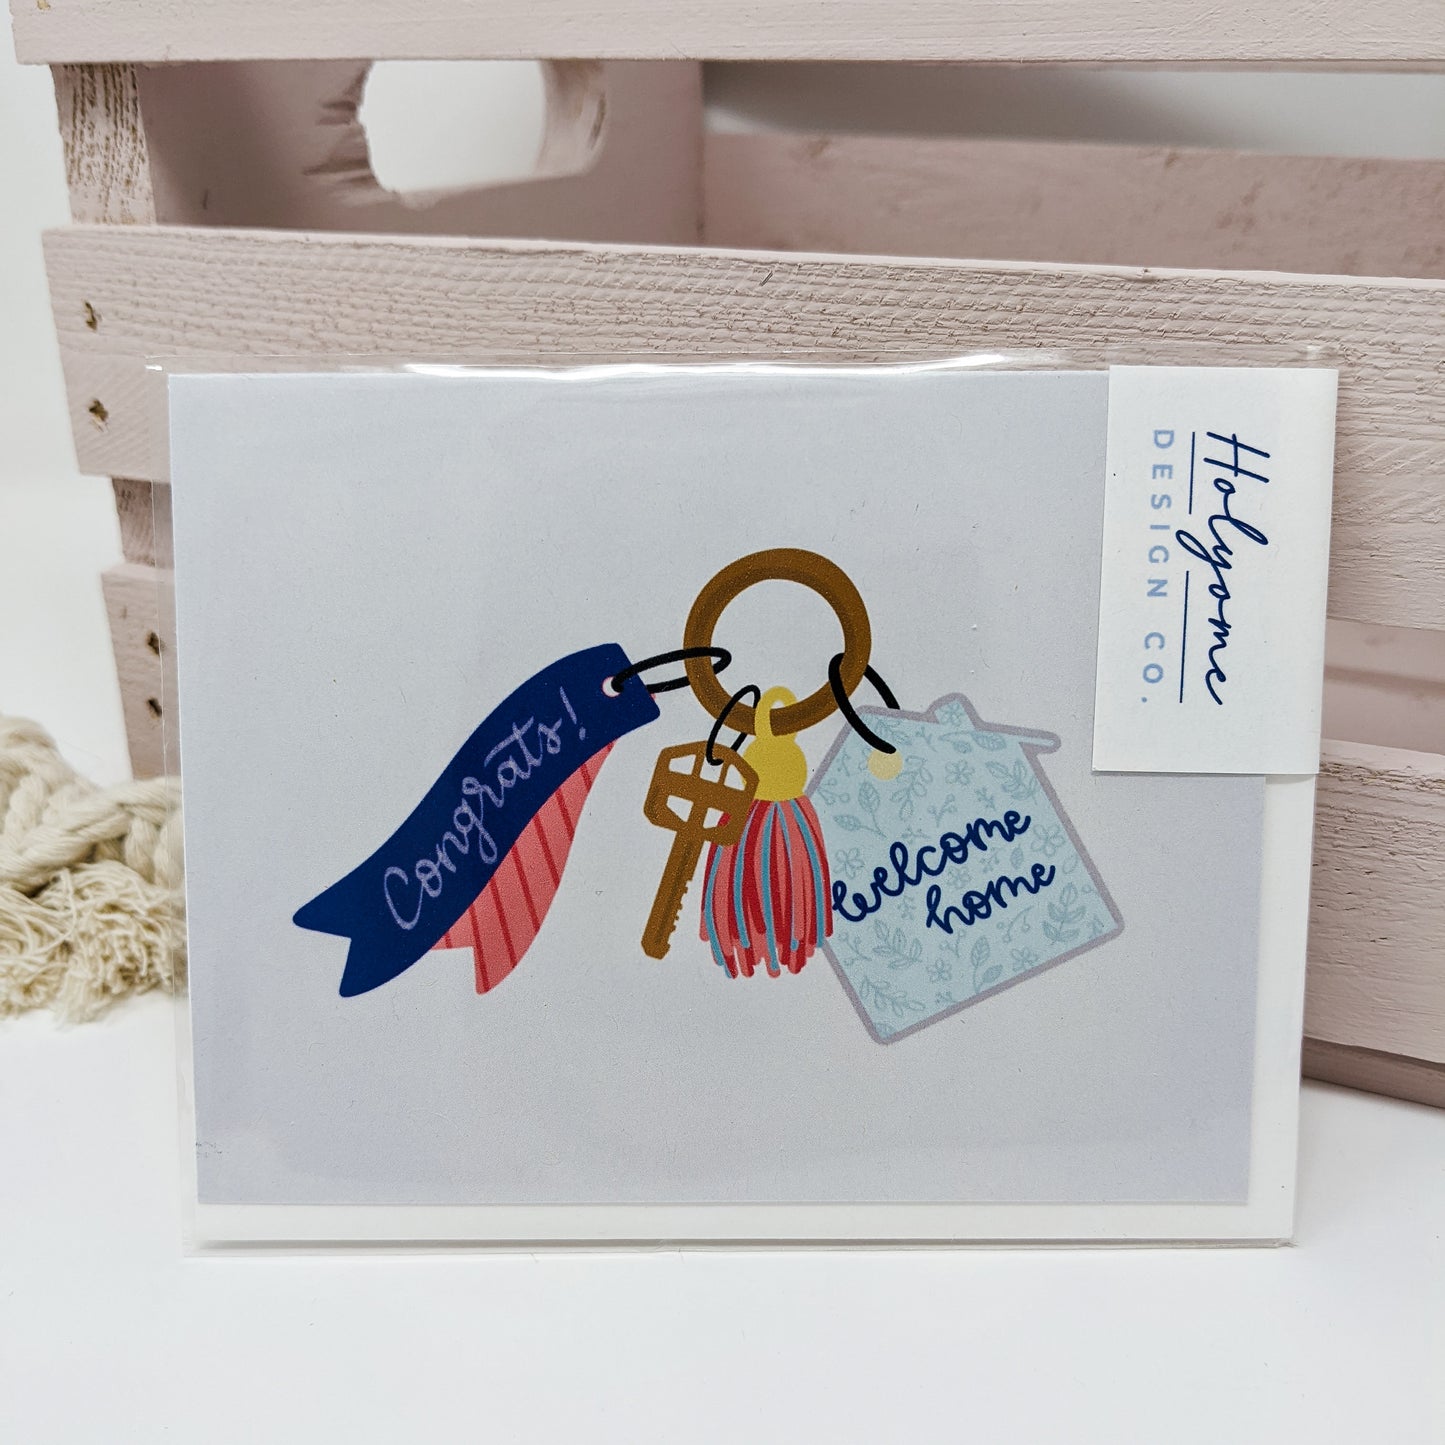 Welcome Home Keys Card - Holyome Design Co.